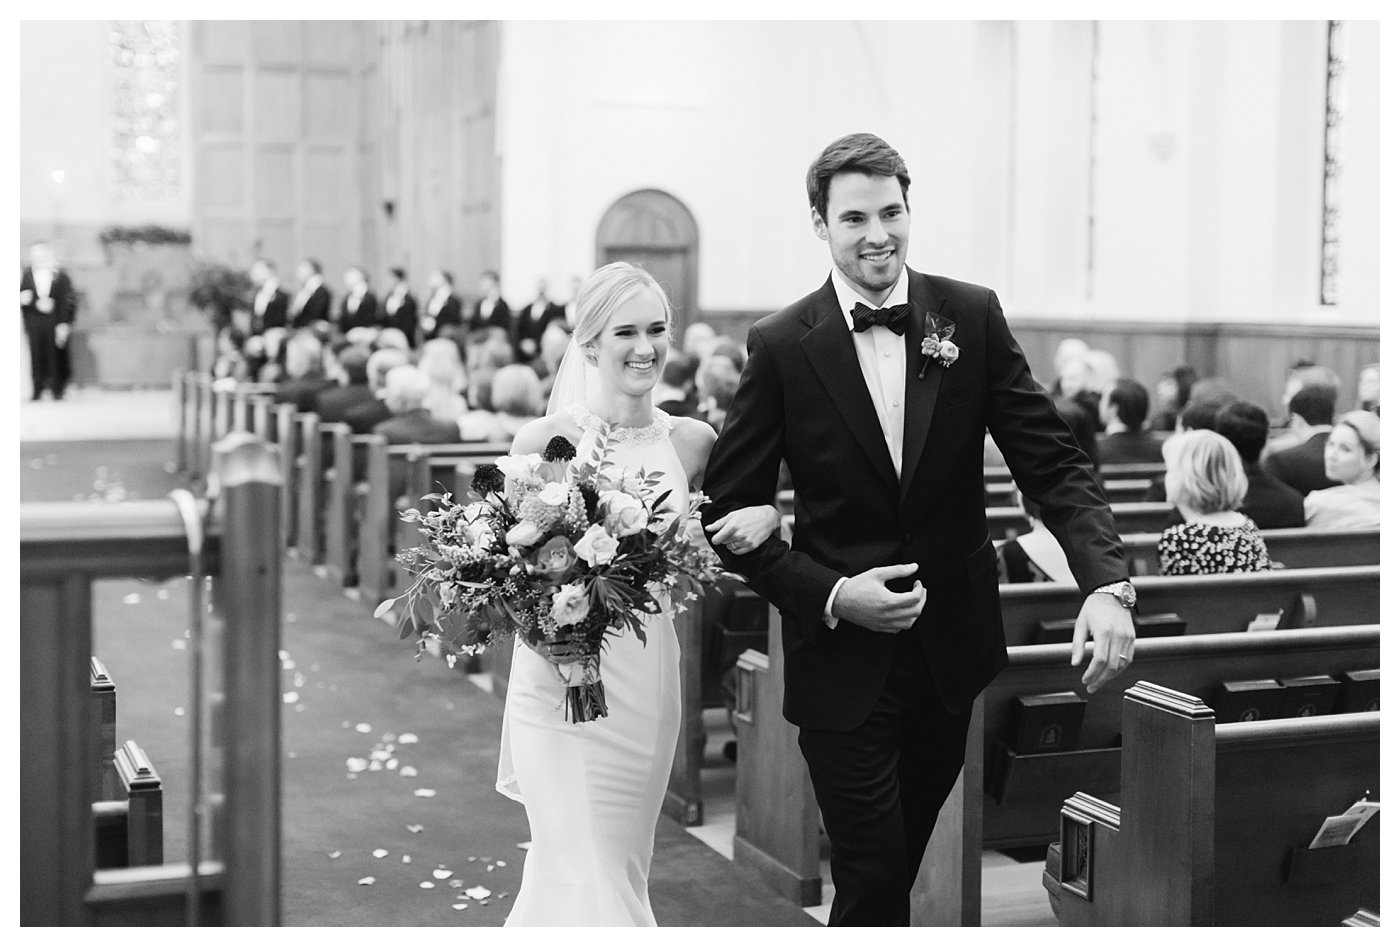 Wedding Ceremony Recessional by Amanda & Grady Photography